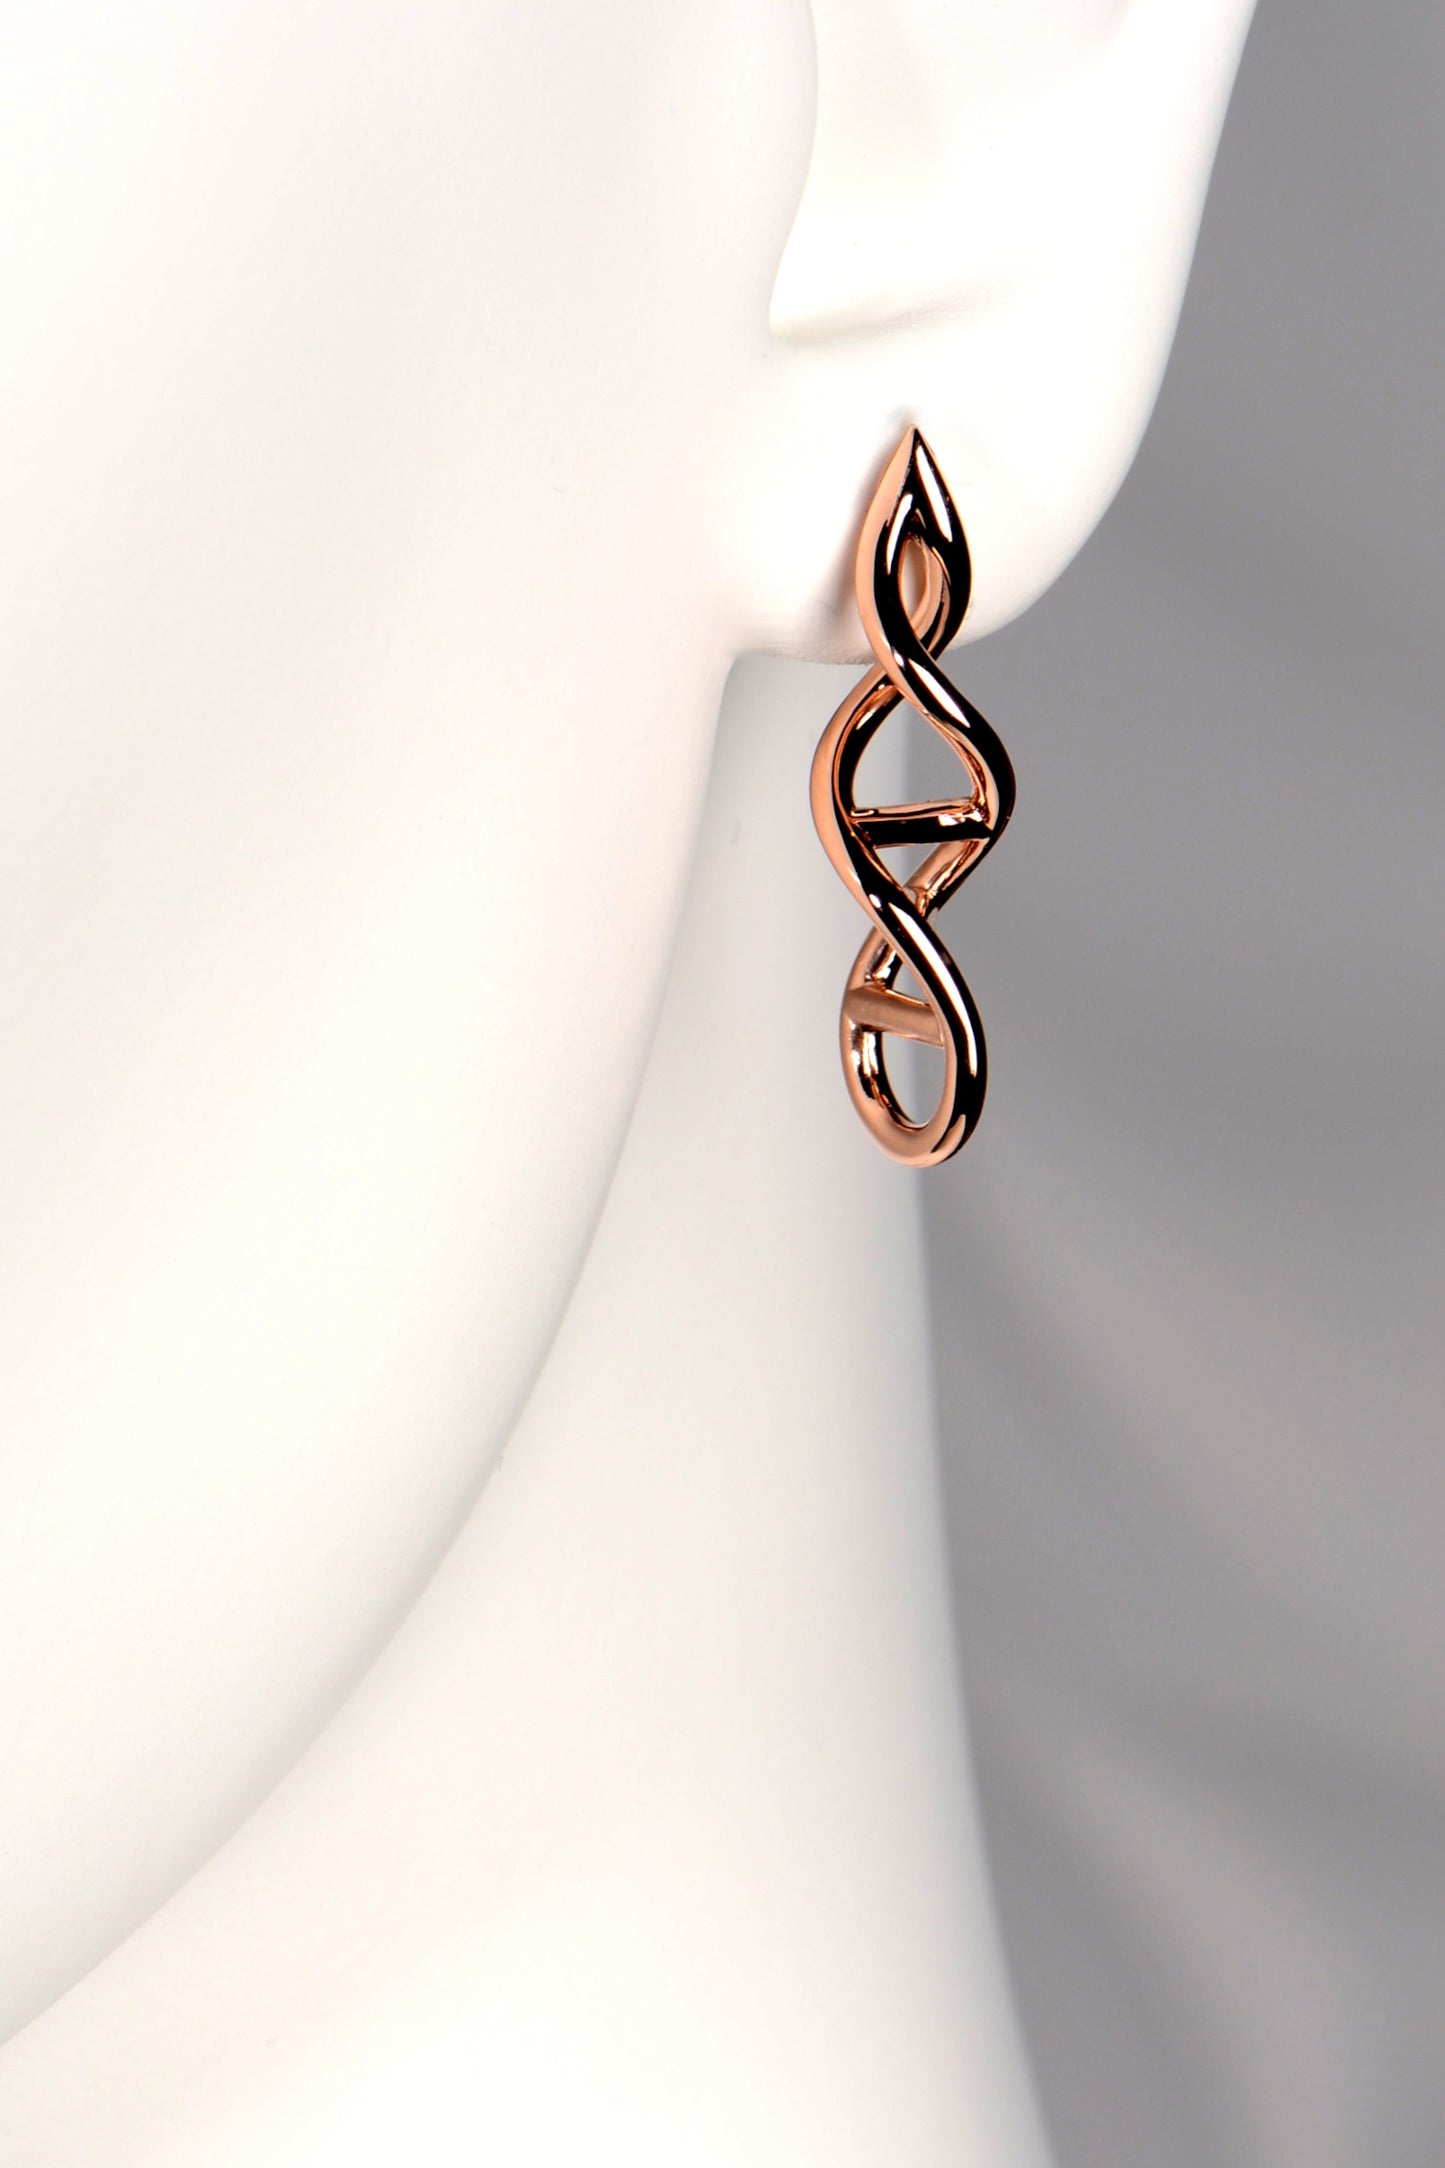 Designer Genes rose gold earrings